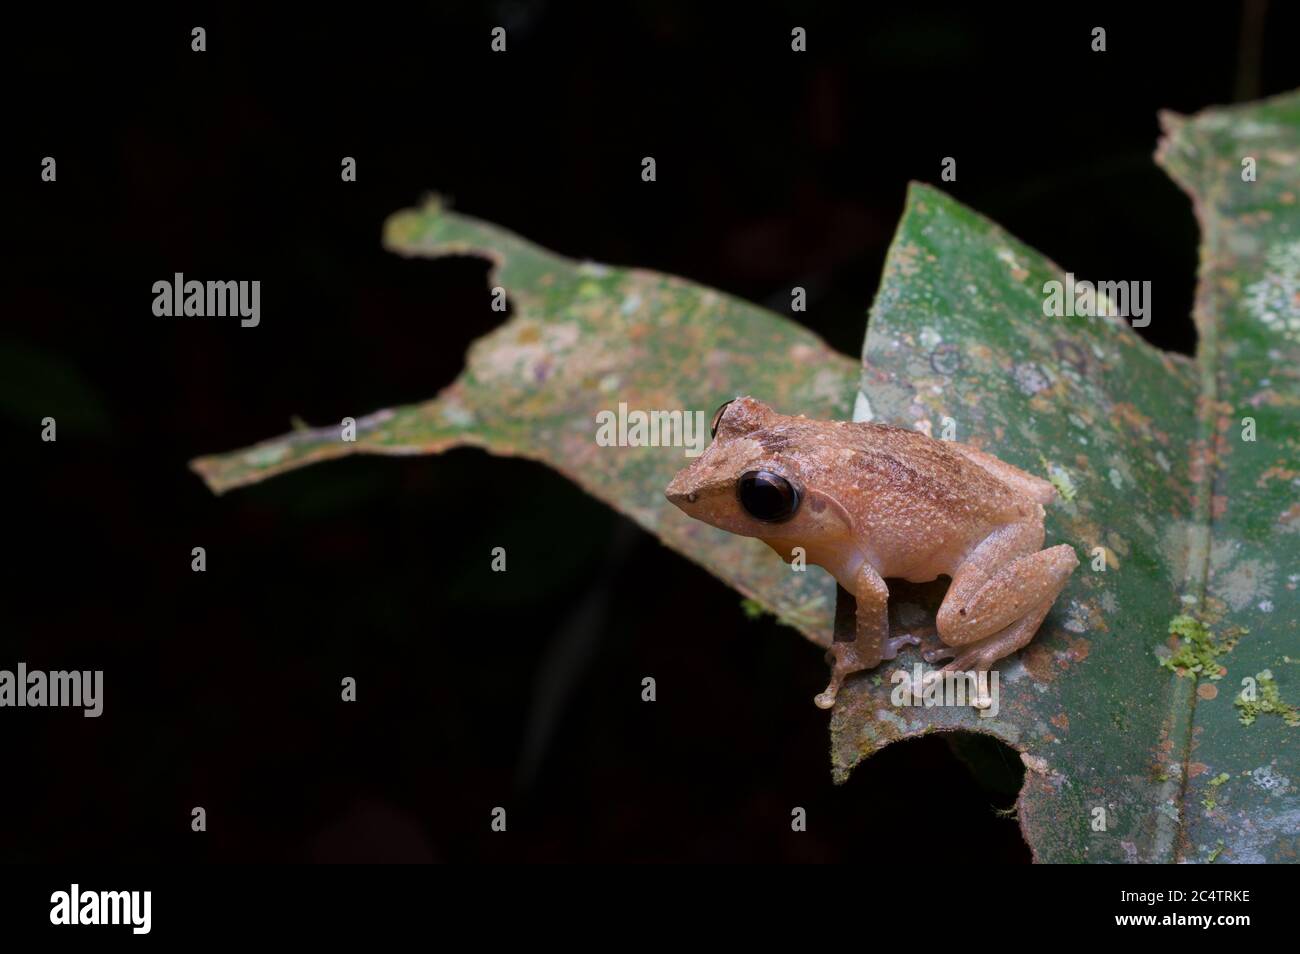 An endemic Schneider's Shrub Frog (Pseudophilautus schneideri) on a leaf at night in Kalutara, Sri Lanka Stock Photo